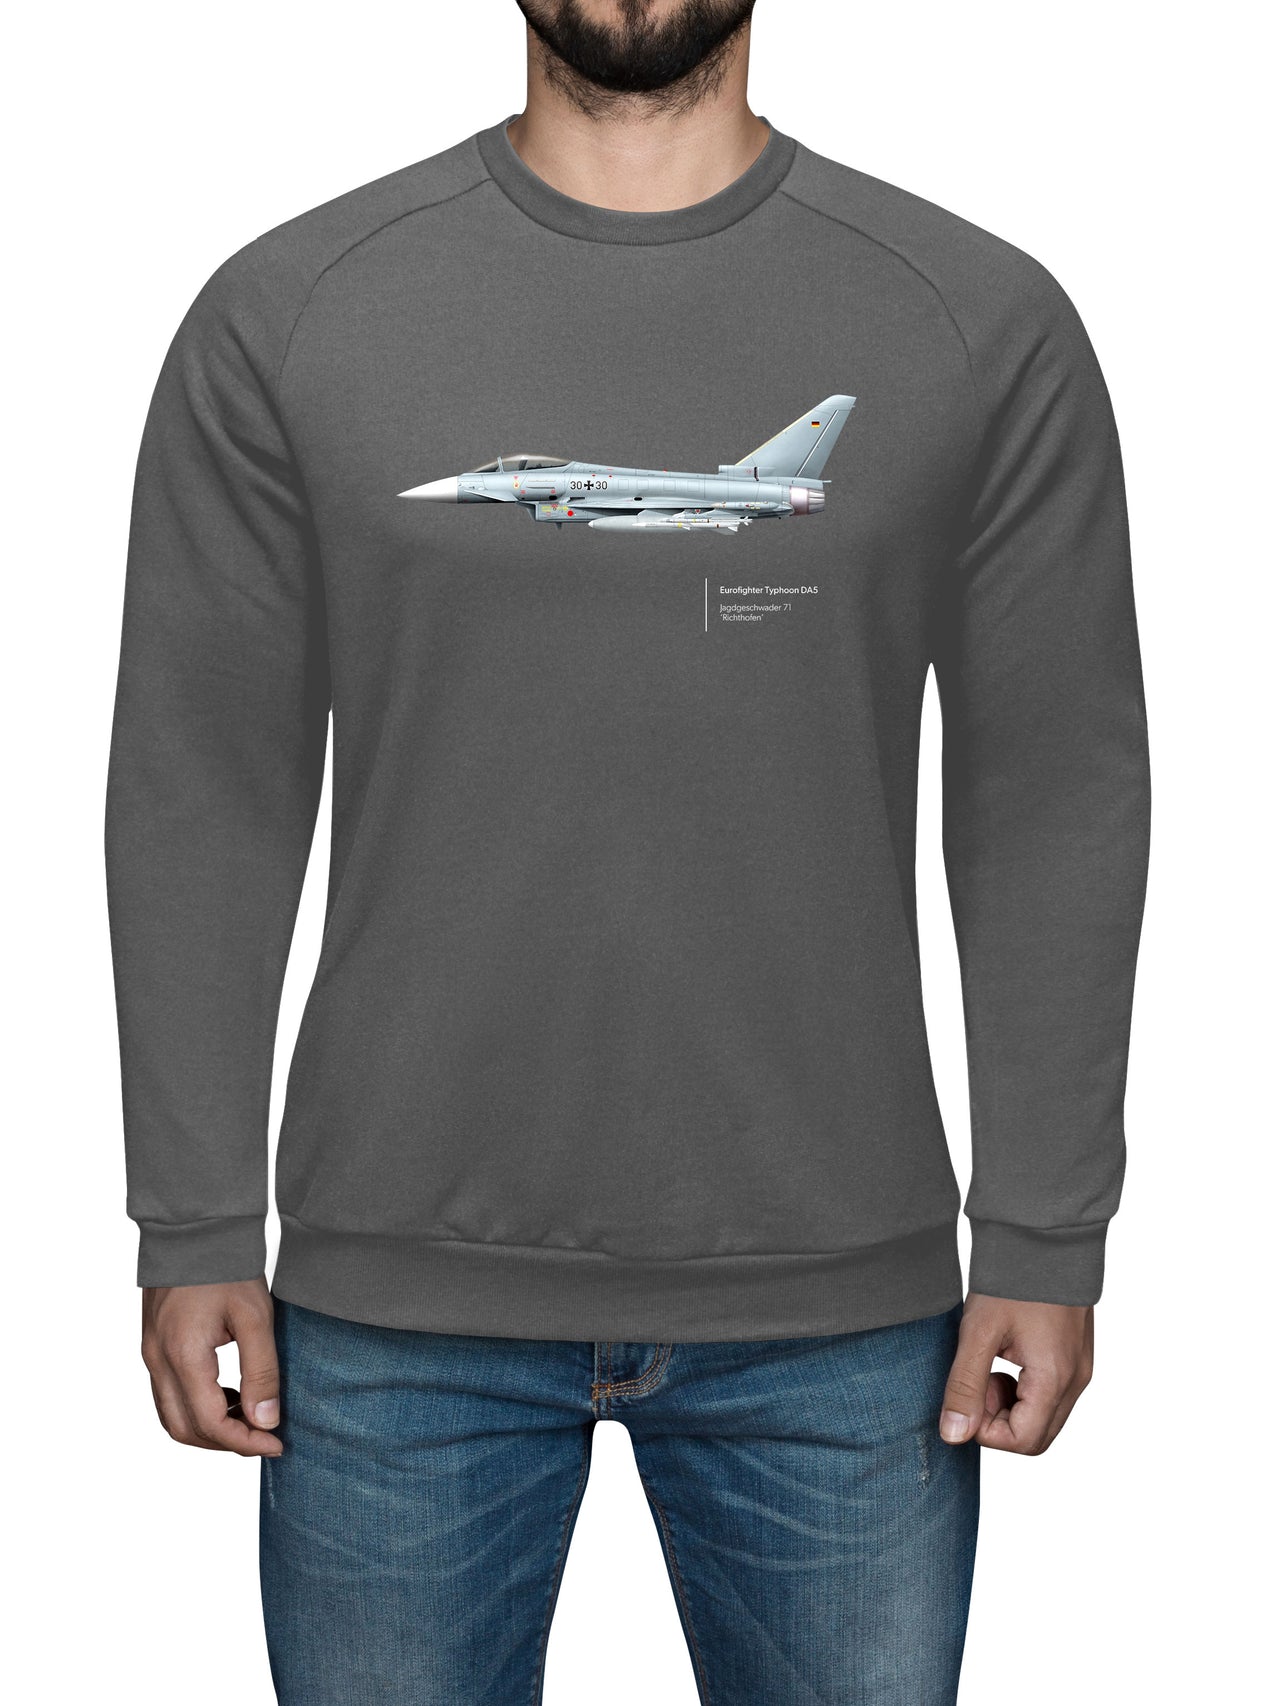 Eurofighter Typhoon JG 71 - Sweat Shirt